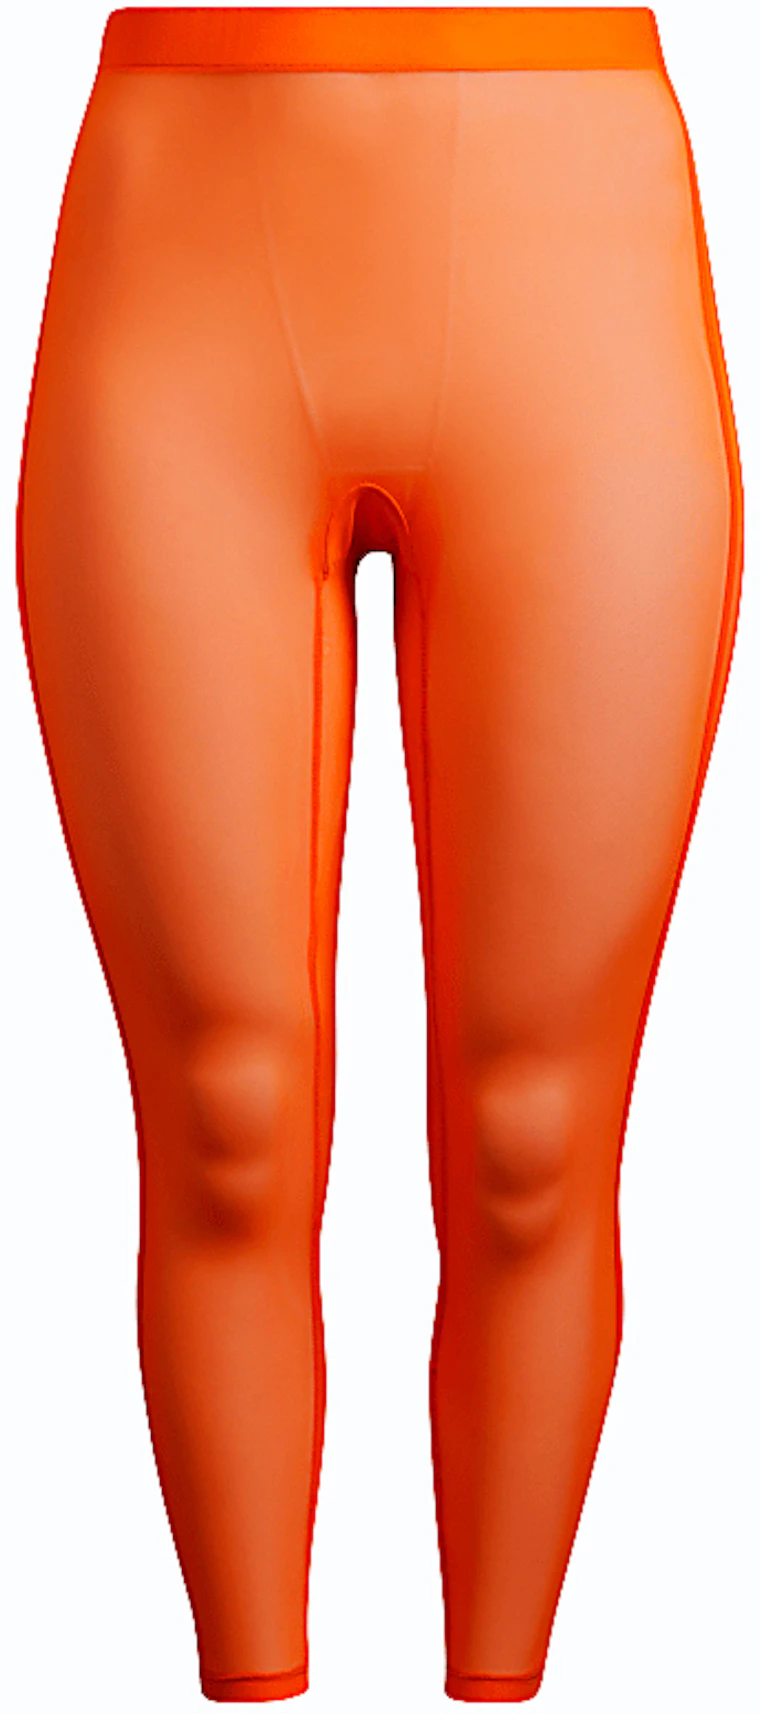 Inhalar Pasado fax adidas Ivy Park Swim Leggings (Plus Size) Solar Orange - SS21 - ES